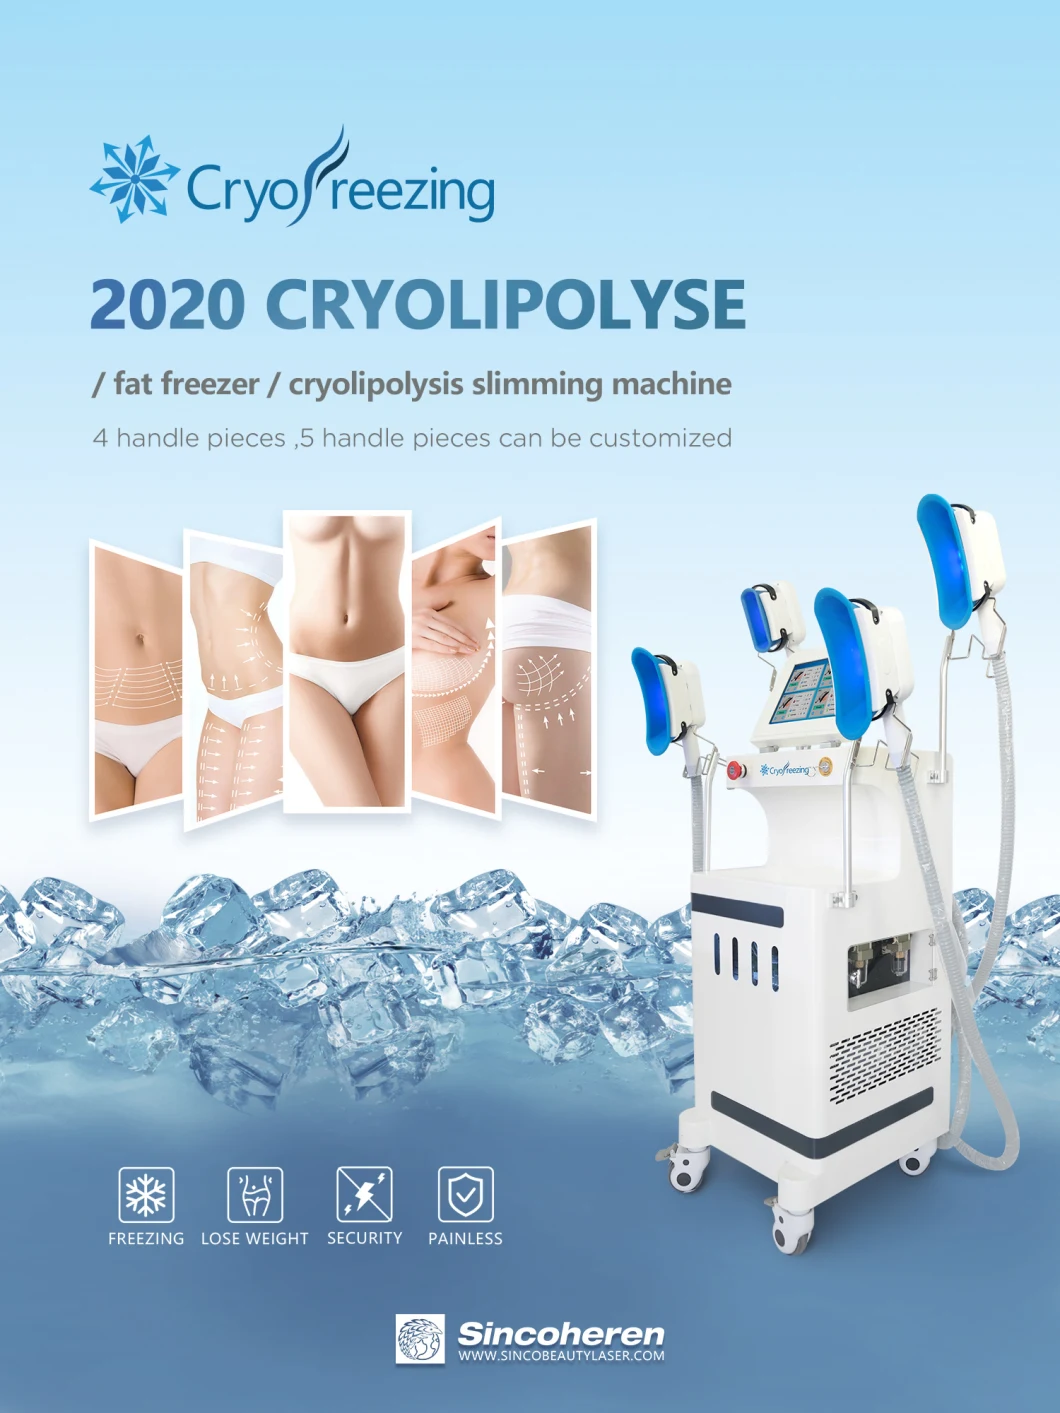 Non-Invasive Freezefat Cool Fat Freezing Body Shape Cryolipolysis Machine